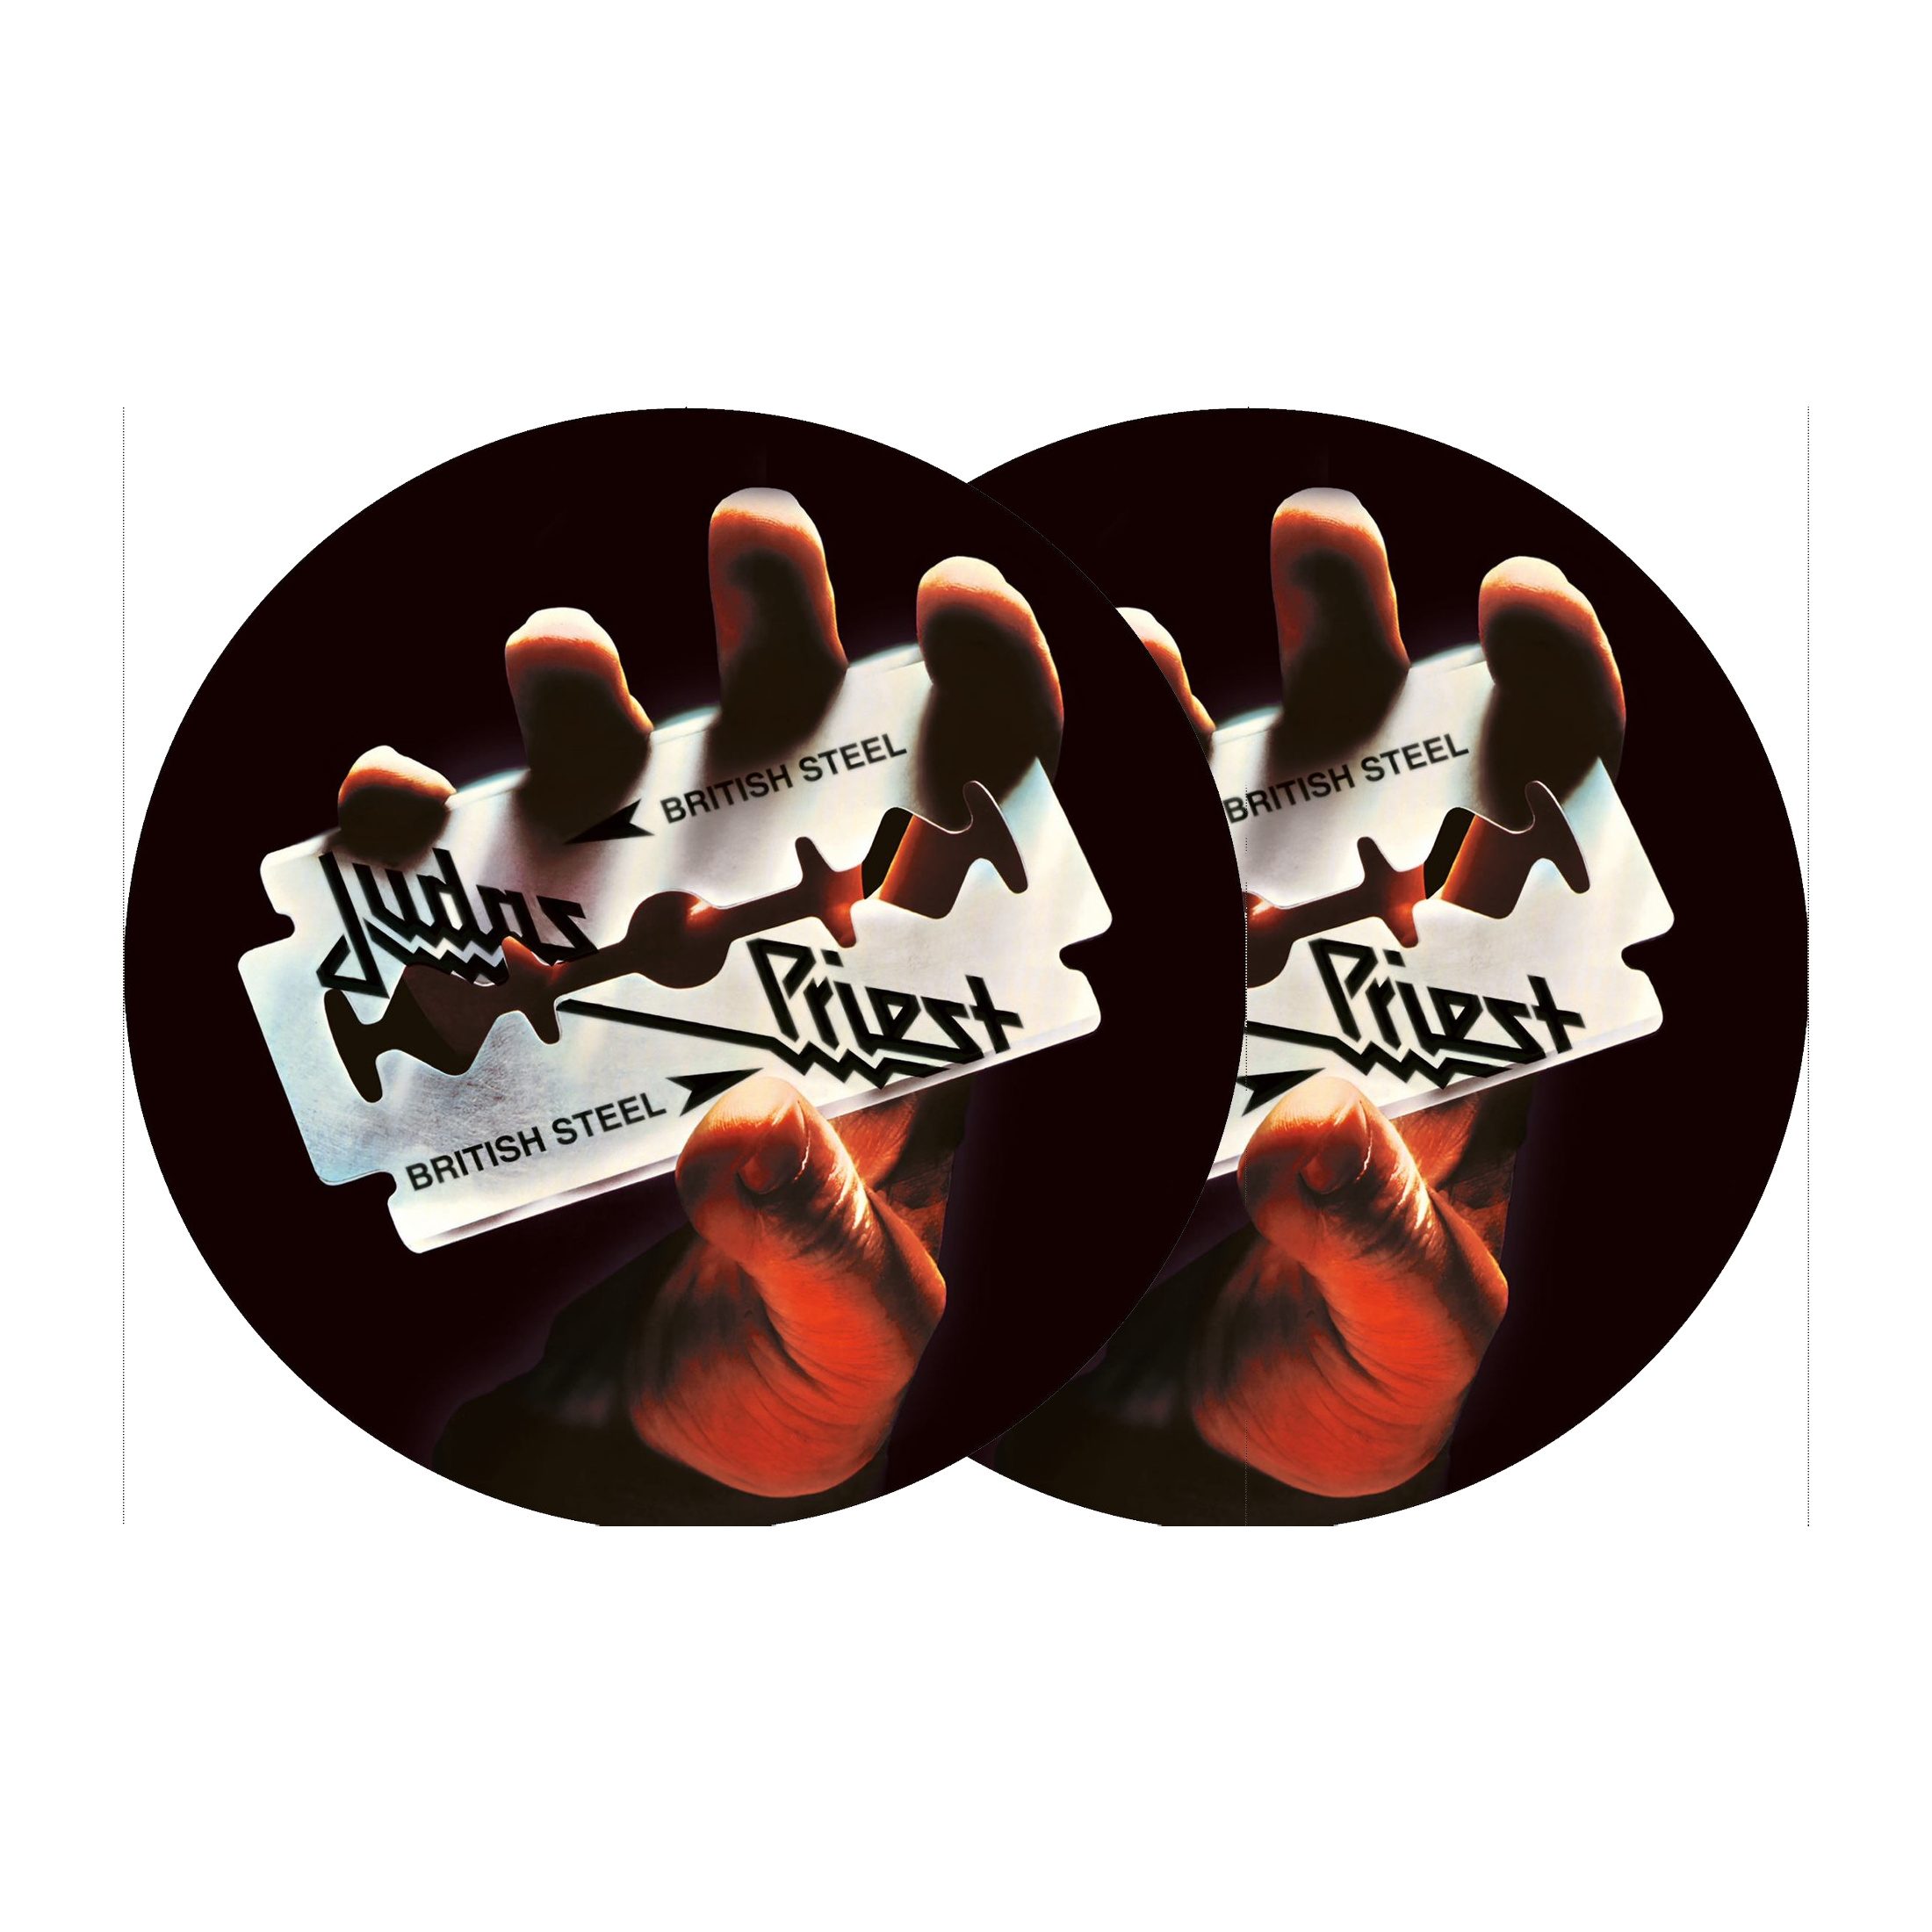 Judas Priest - British Steel: Limited Edition 40th Anniversary Picture Disc Vinyl 2LP